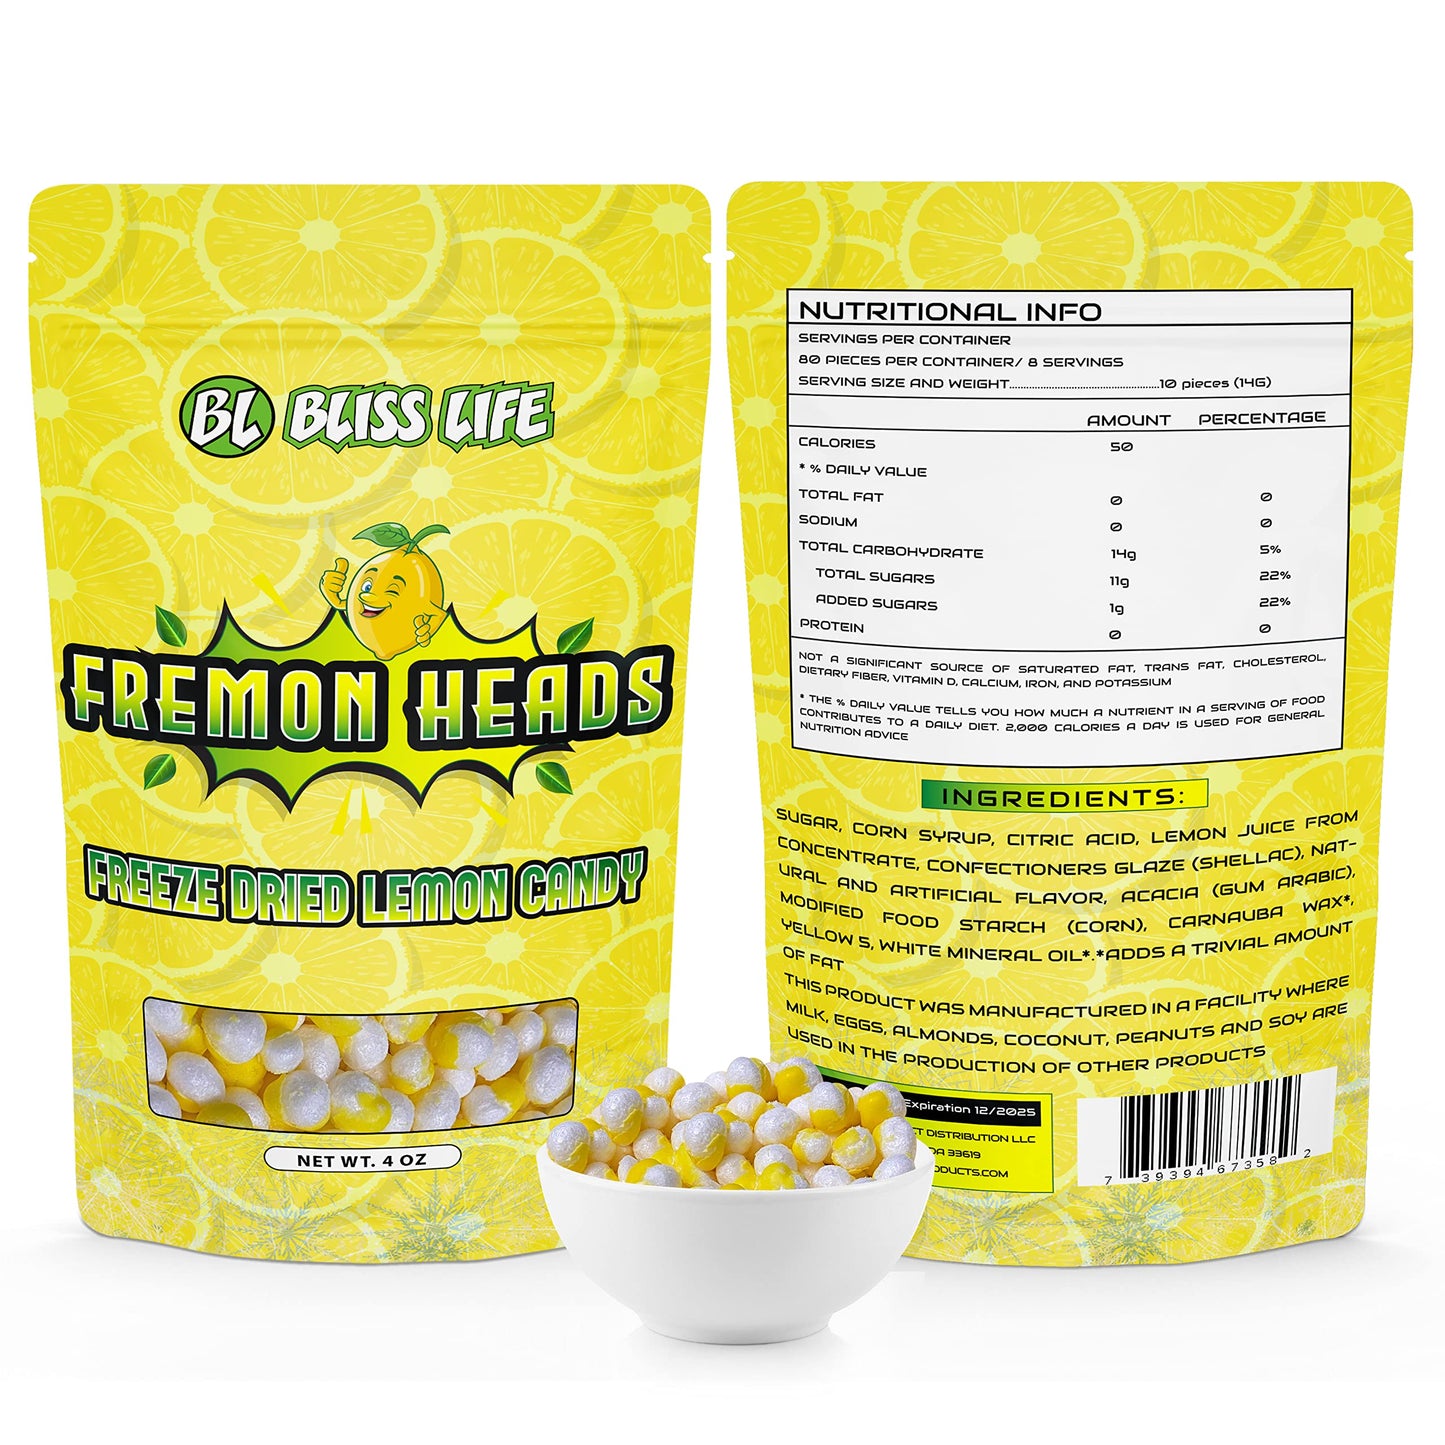 Fremonheads - Lemon Bliss Life Freeze Dried Candy informations